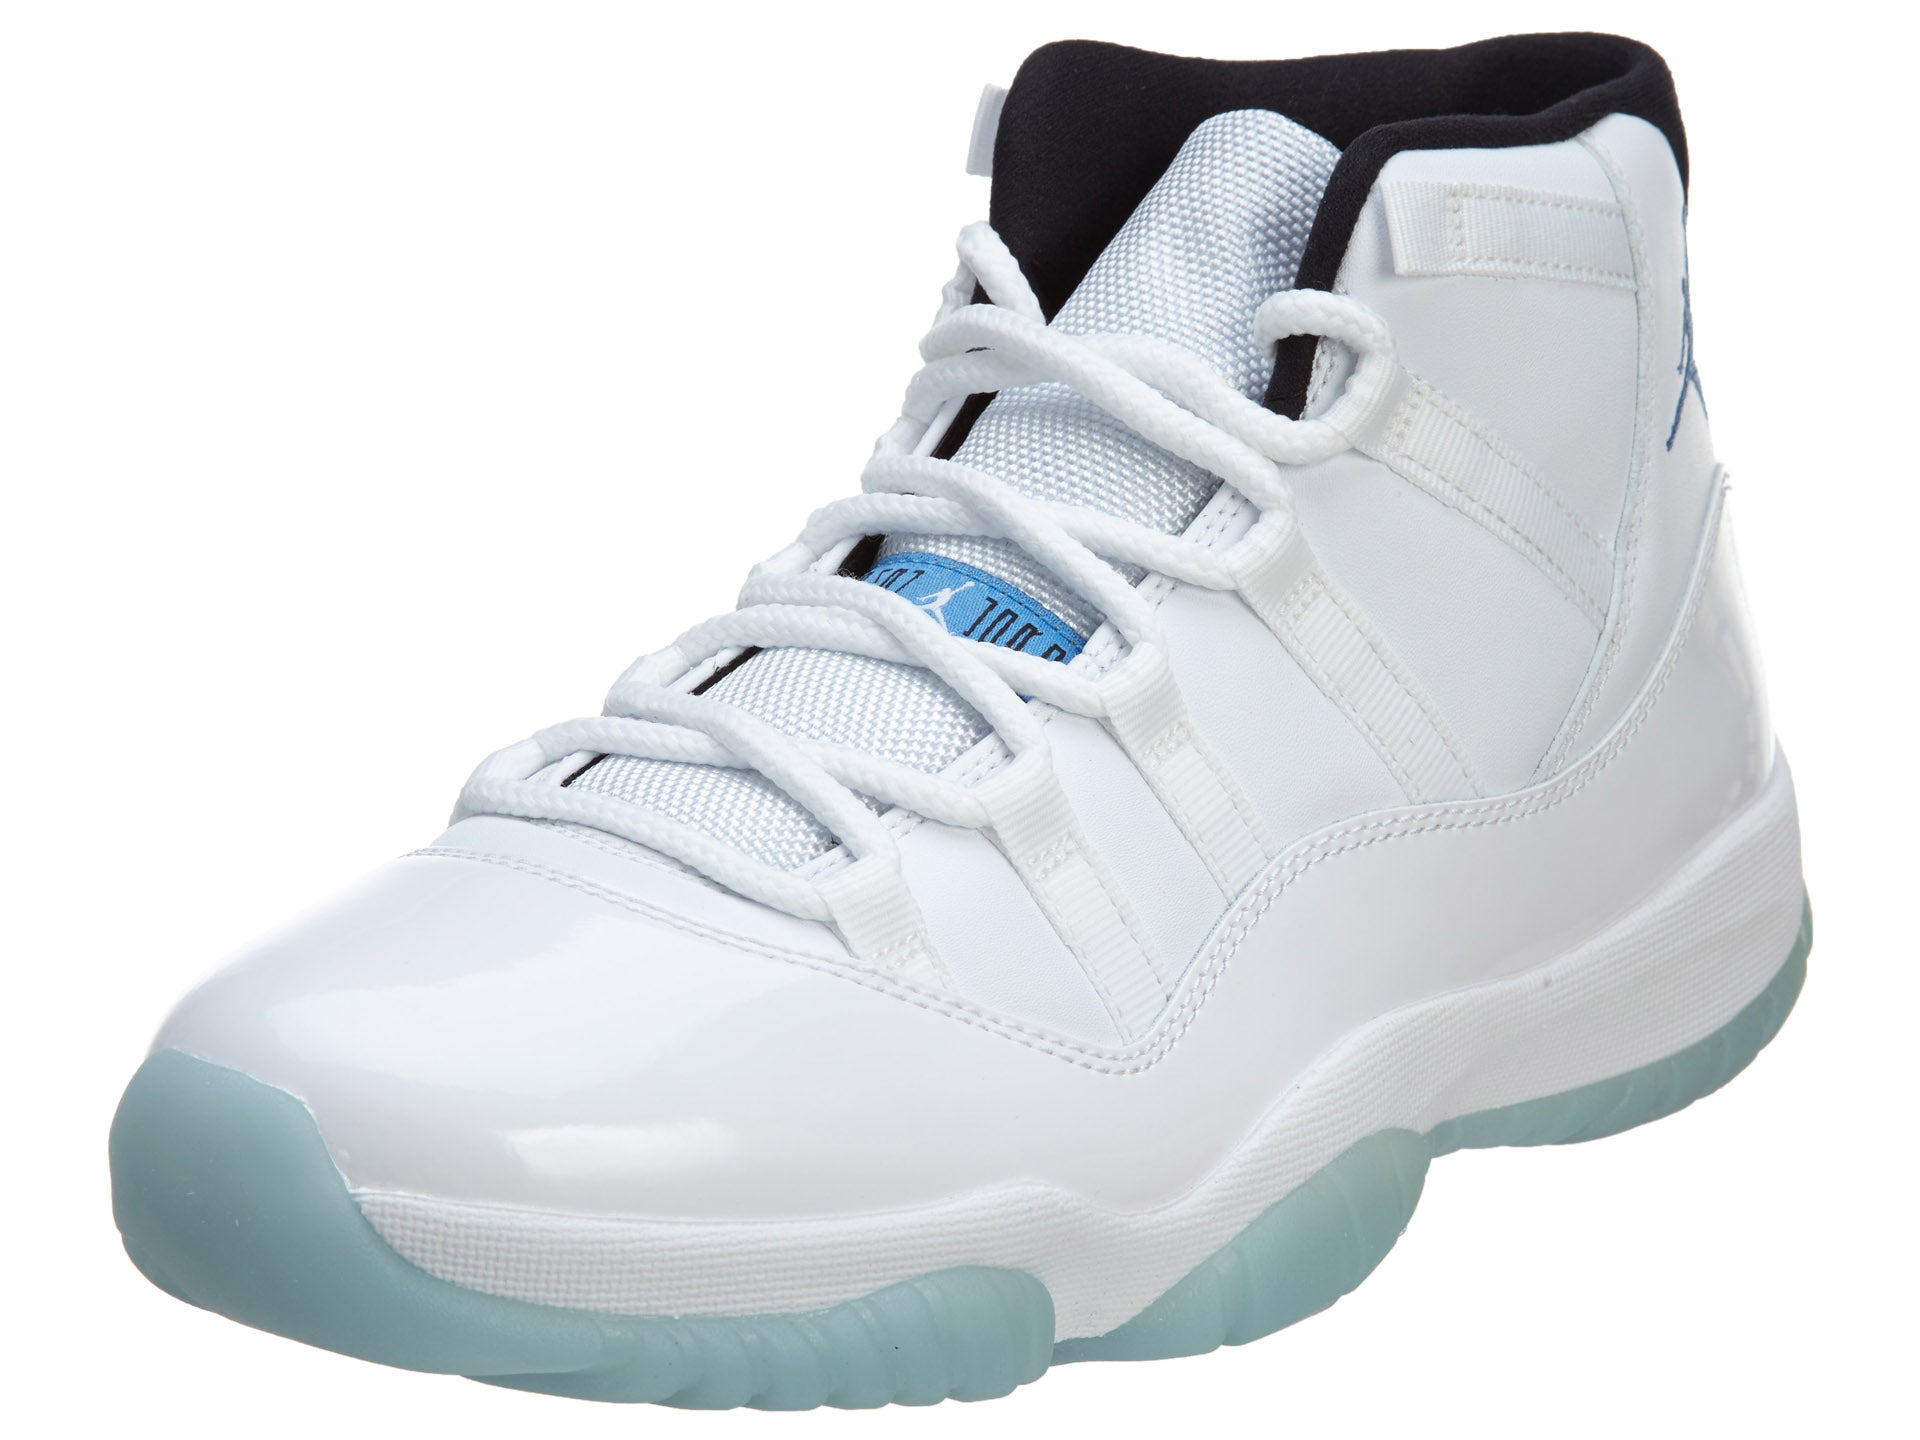 Air Jordan Retro 11 Basketball Shoes #378037-117